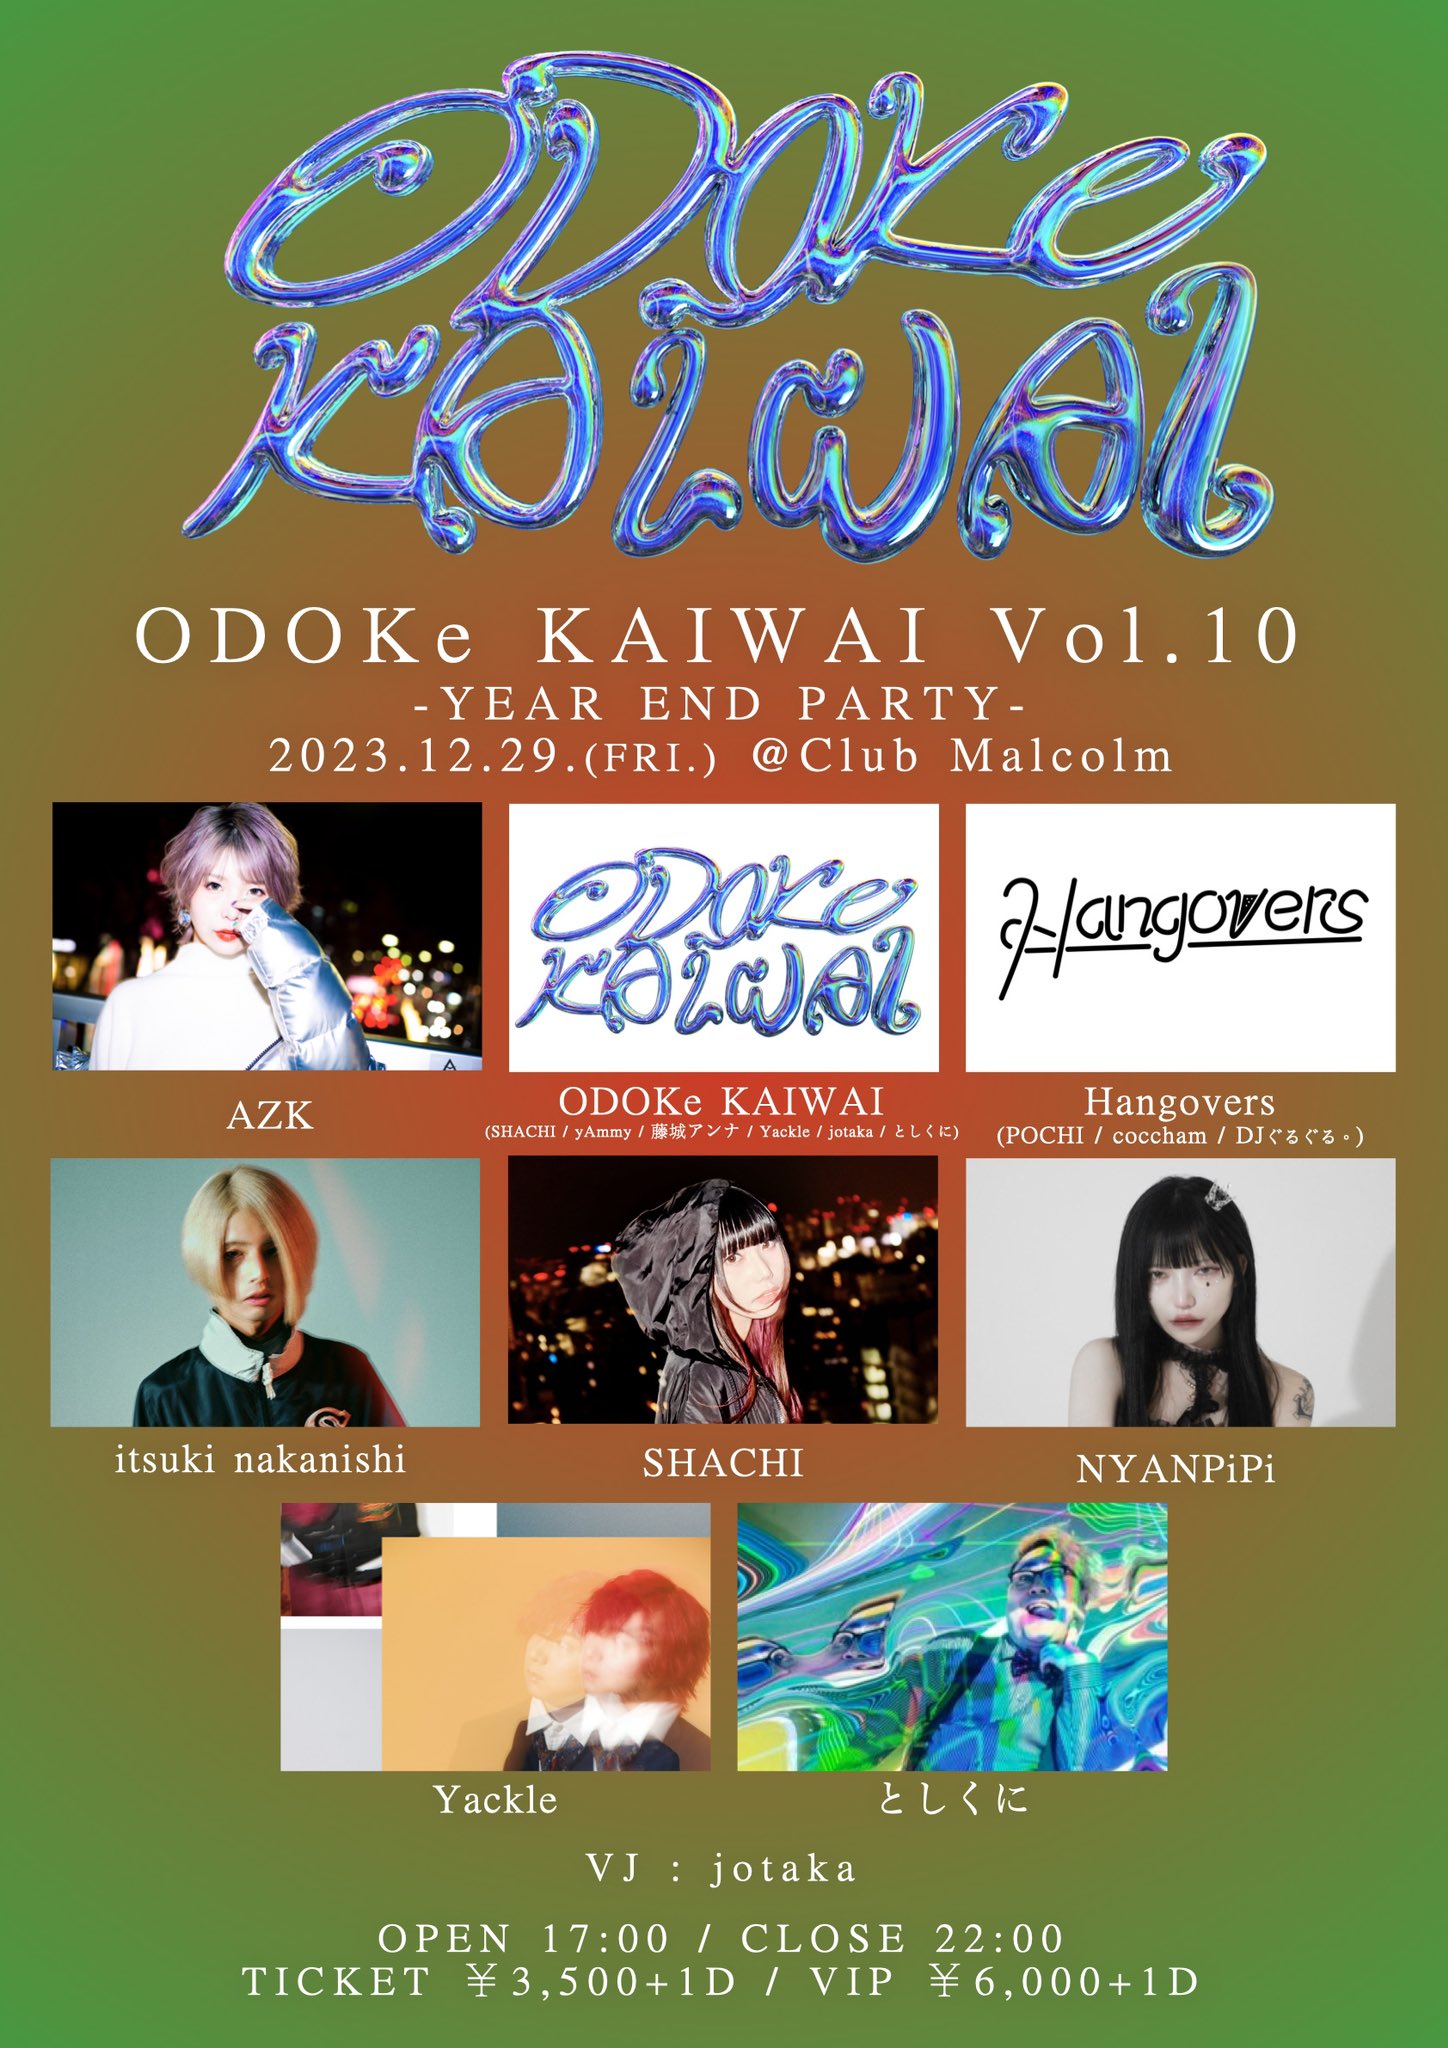 ODOKe KAIWAI Vol.10 -YEAR END PARTY-